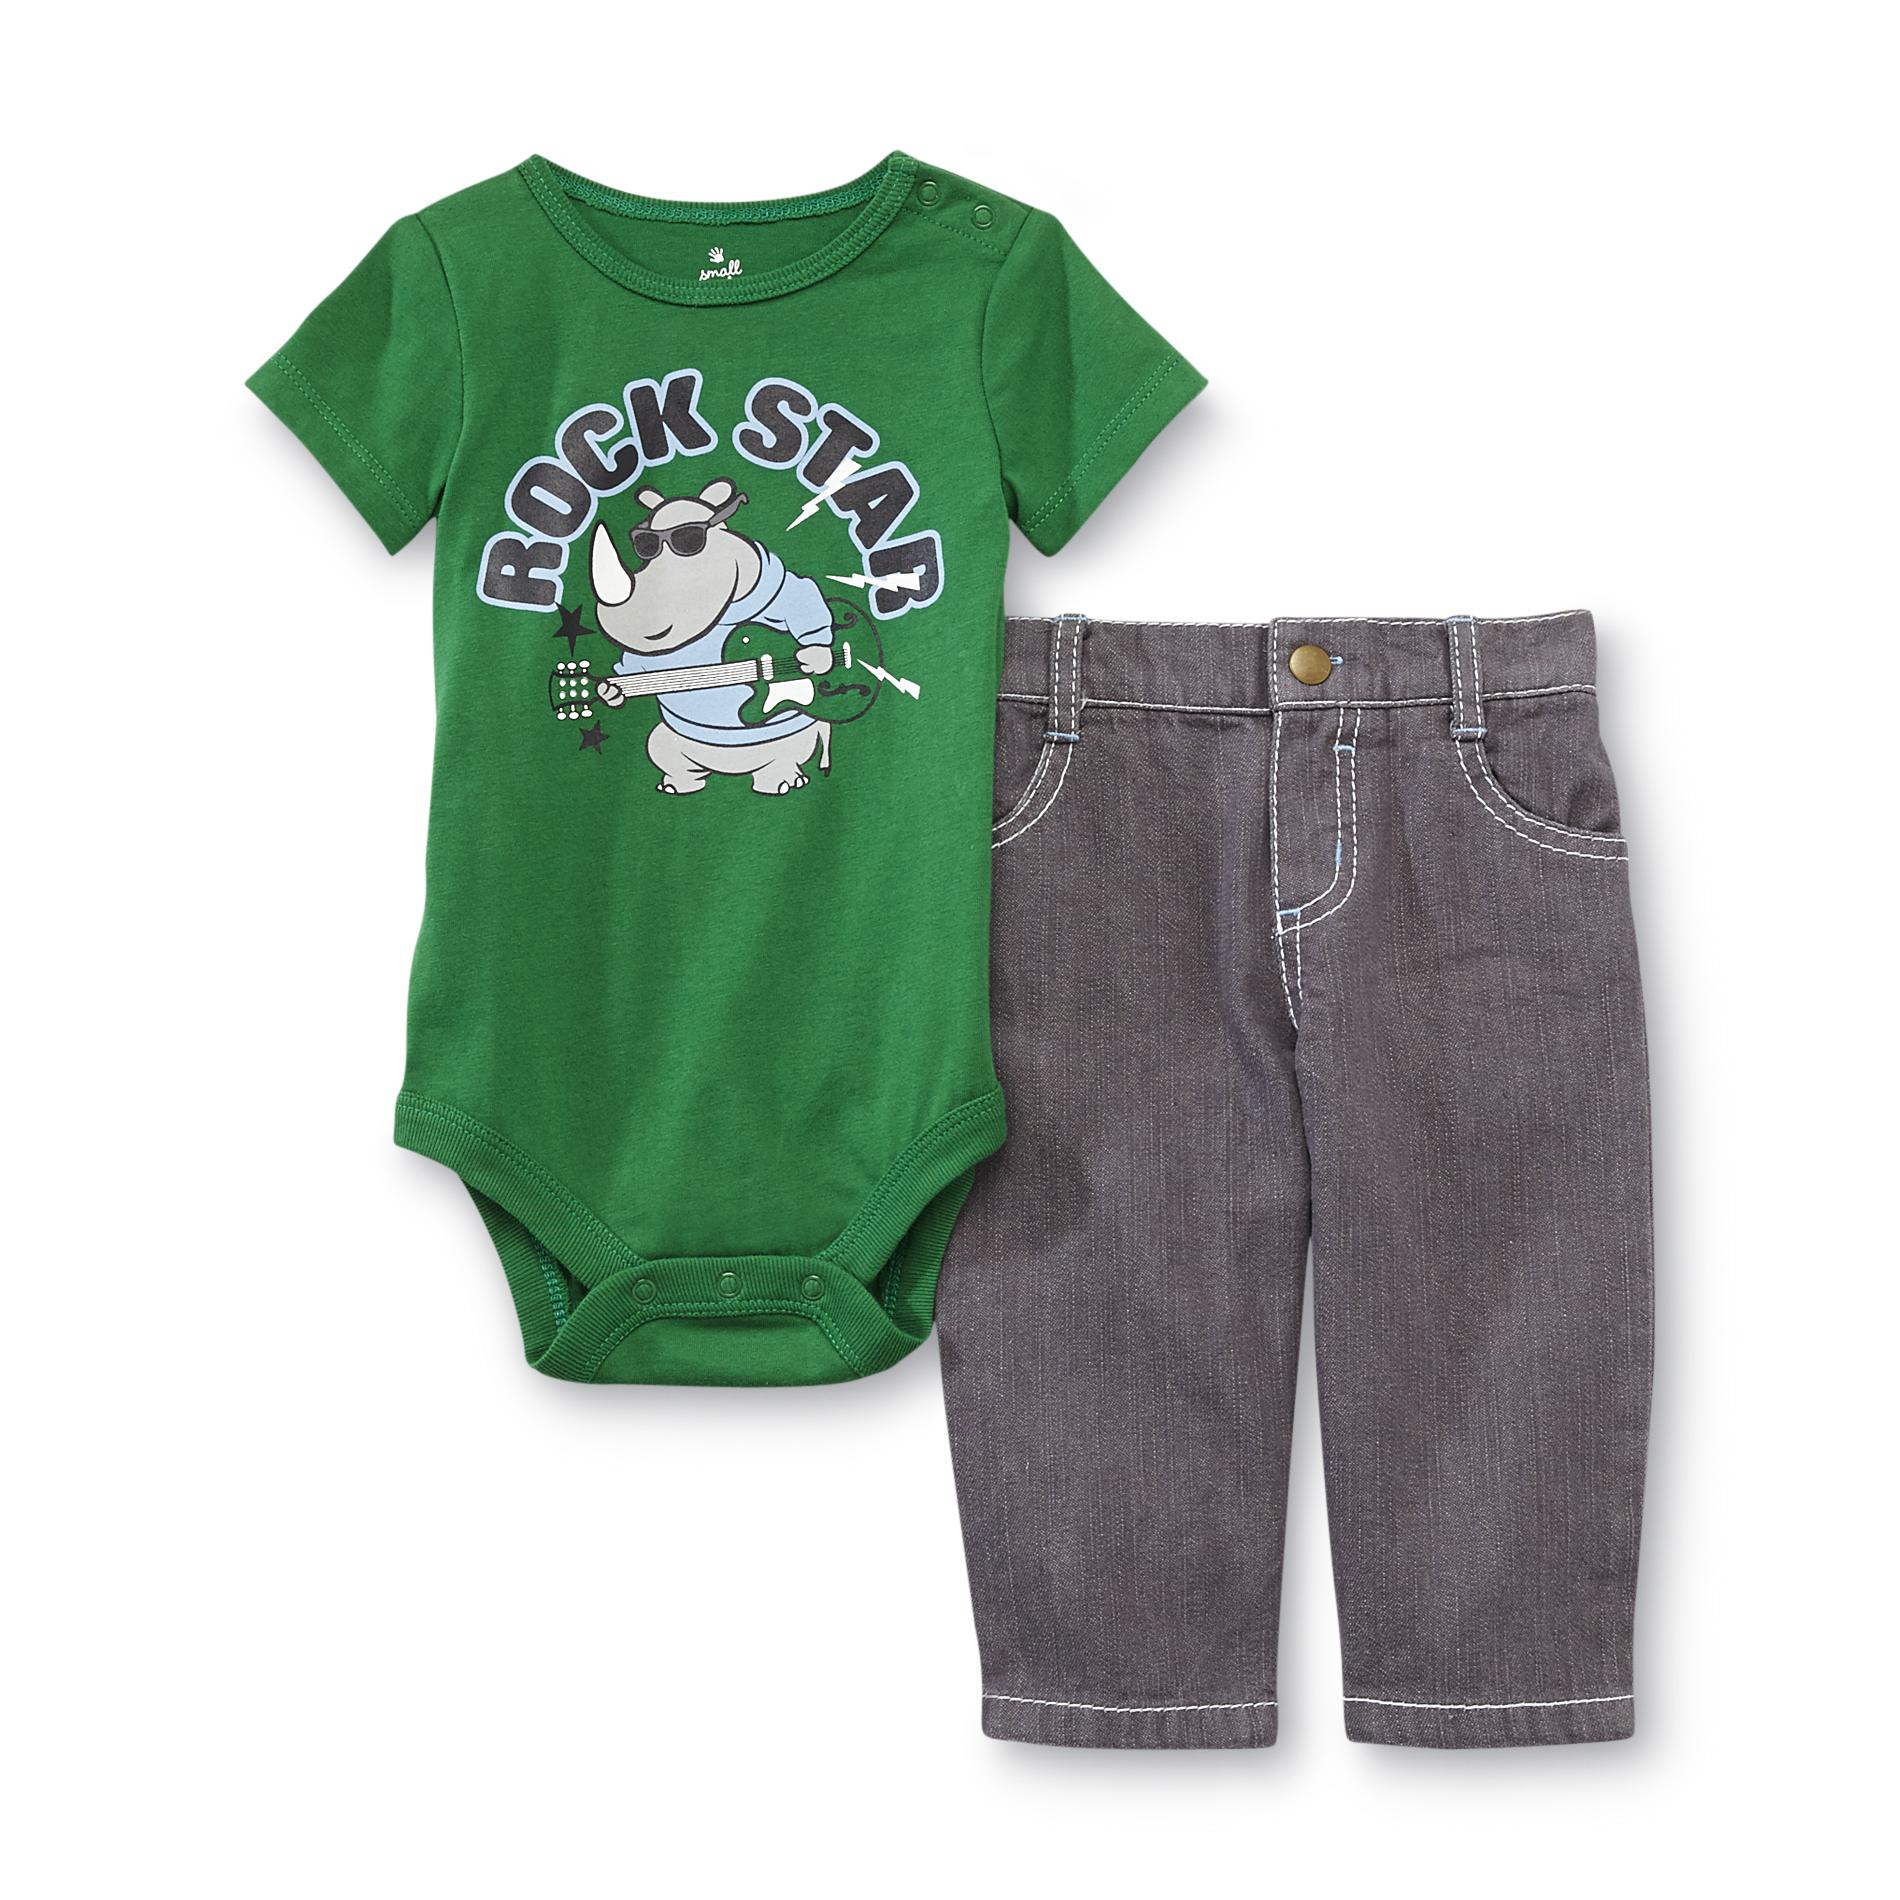 Small Wonders Infant Boy's Bodysuit & Jeans - Rock Star